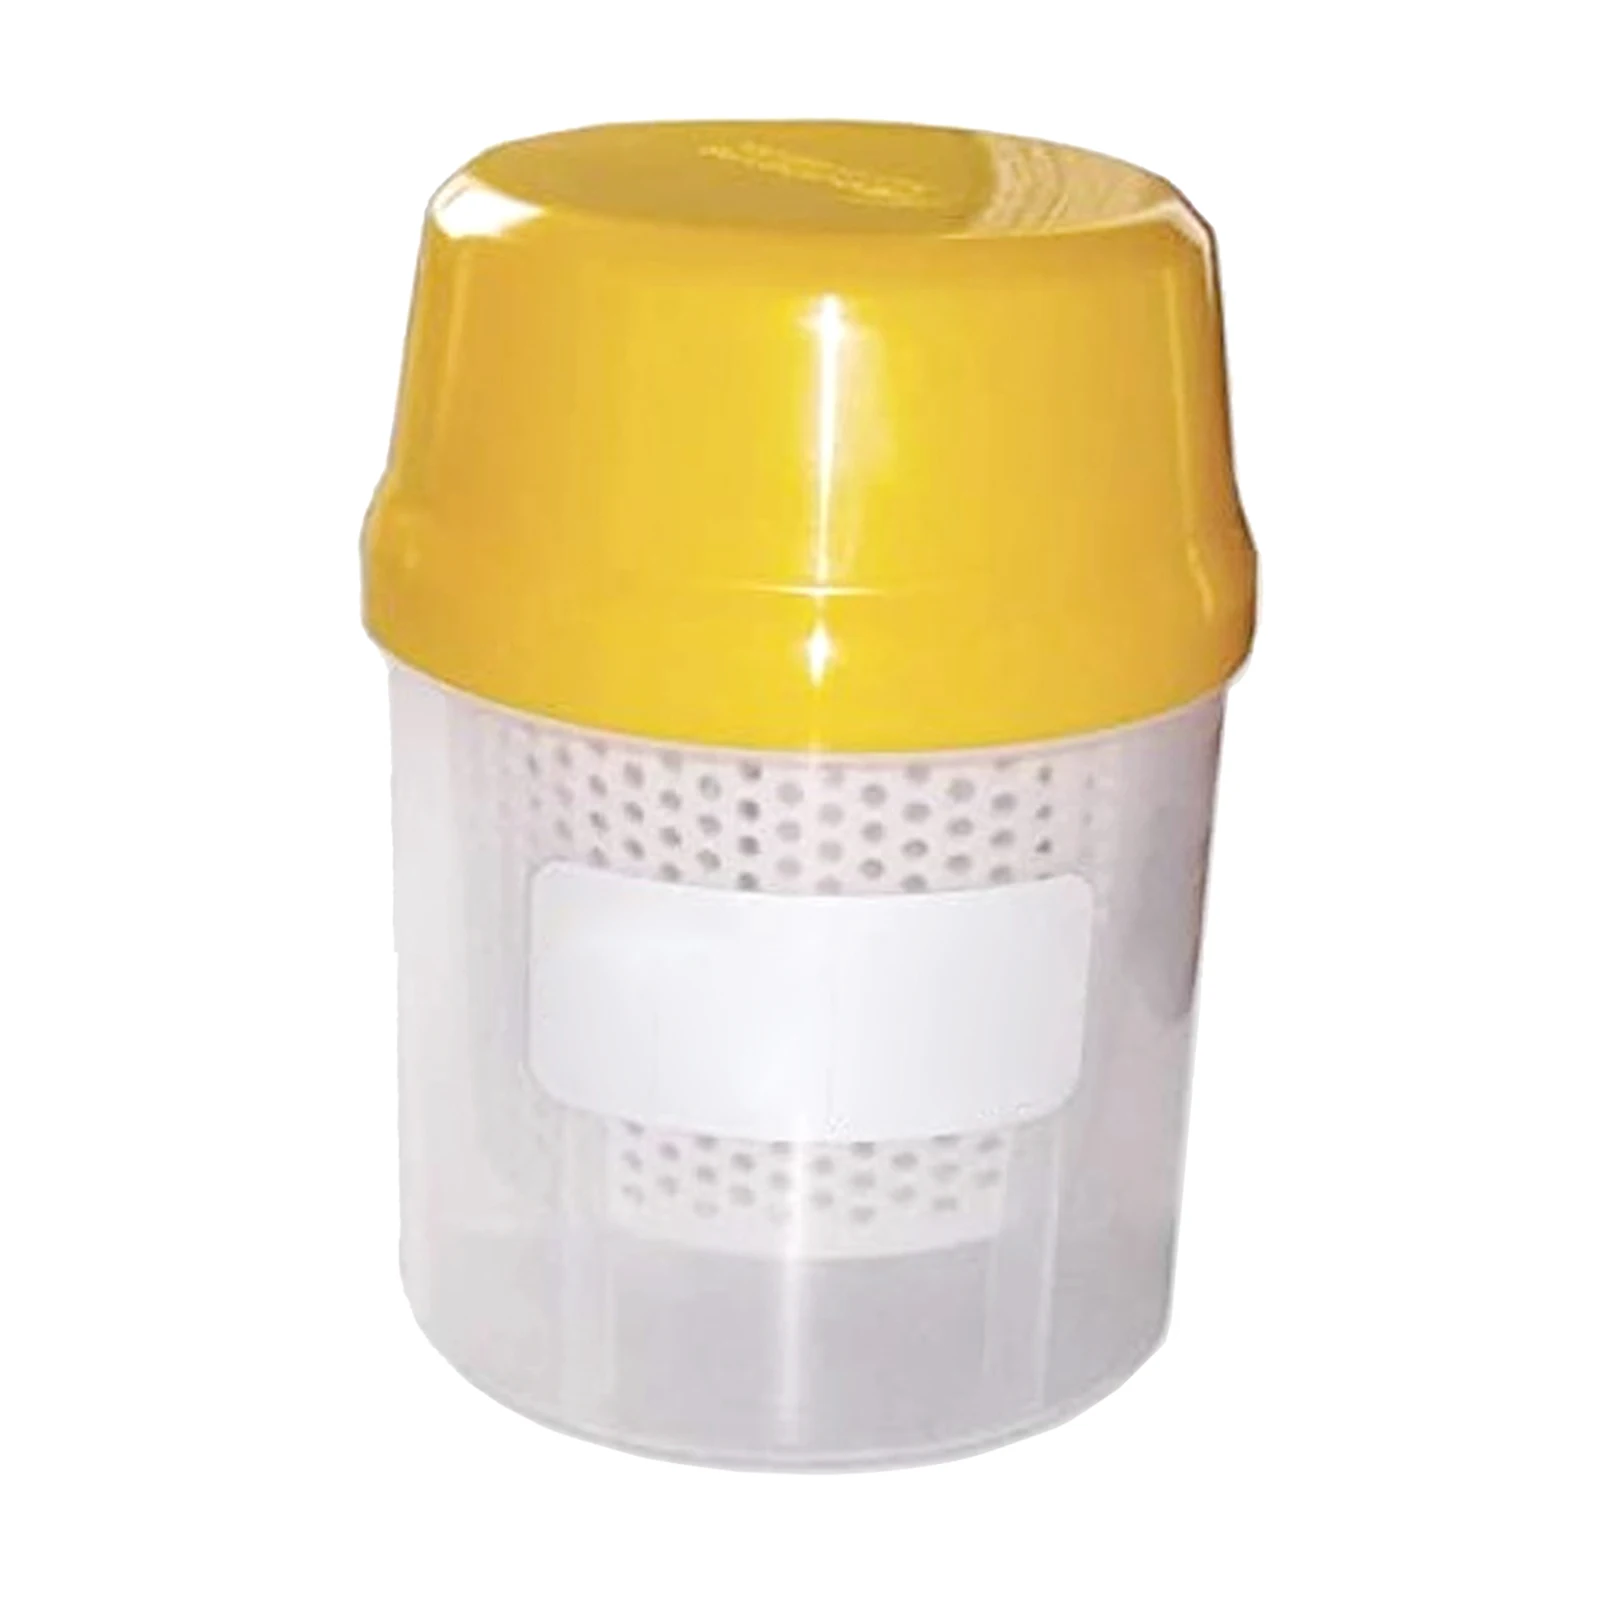 Clear Plastic Varroa Shaker Counting Killer Monitoring Bottle Beekeeper Beehive Bees Beekeeping Equipment Tool